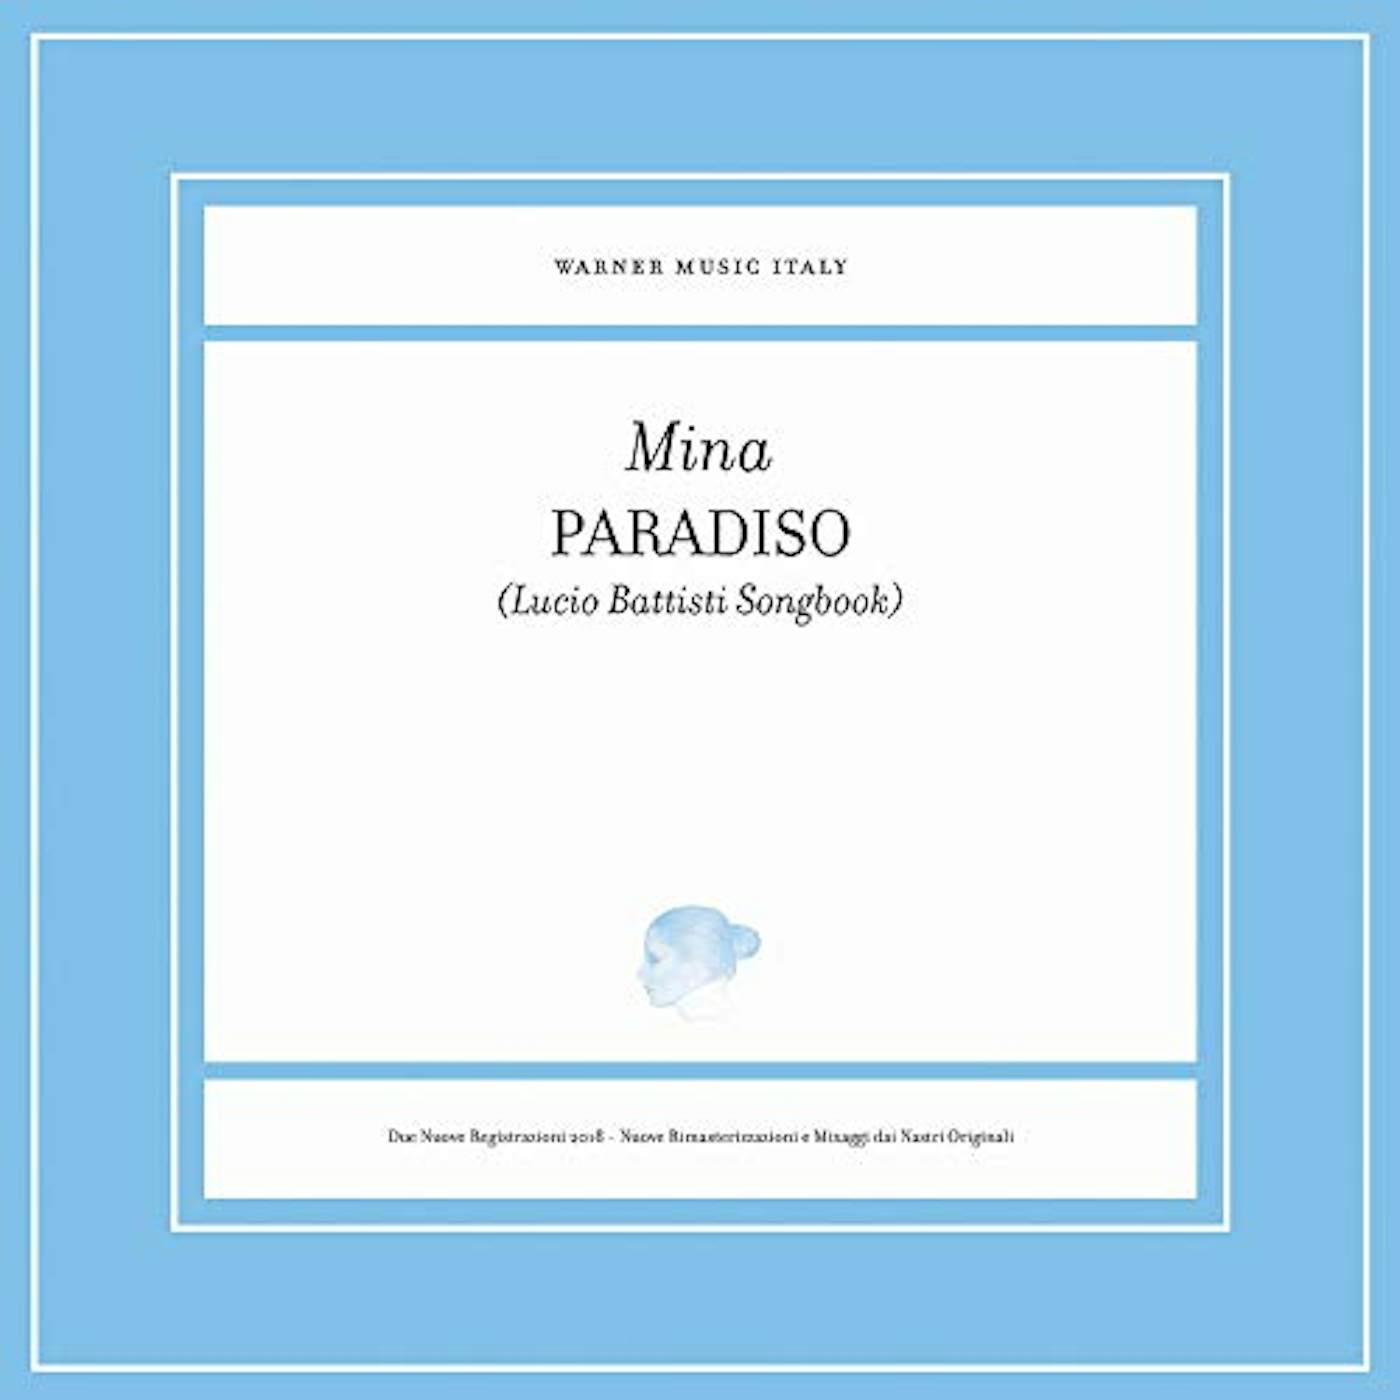 Mina PARADISO: LUCIO BATTISTI SONGBOOK CD